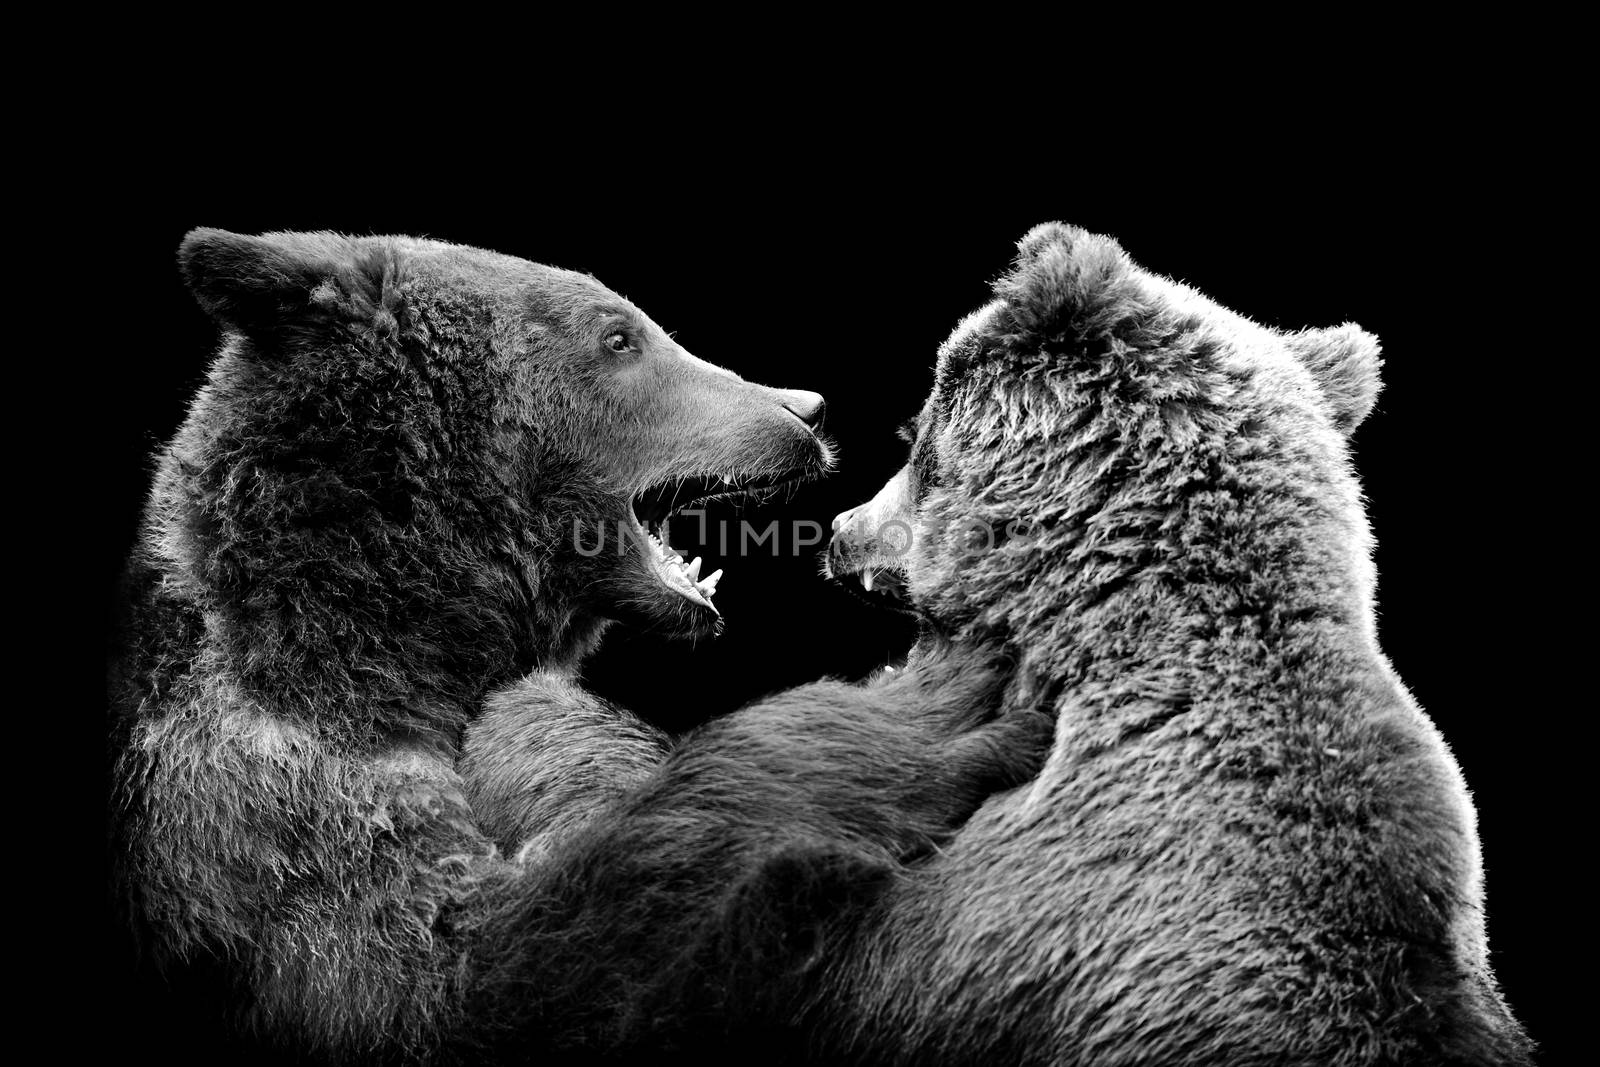 Bear on dark background. Black and white image